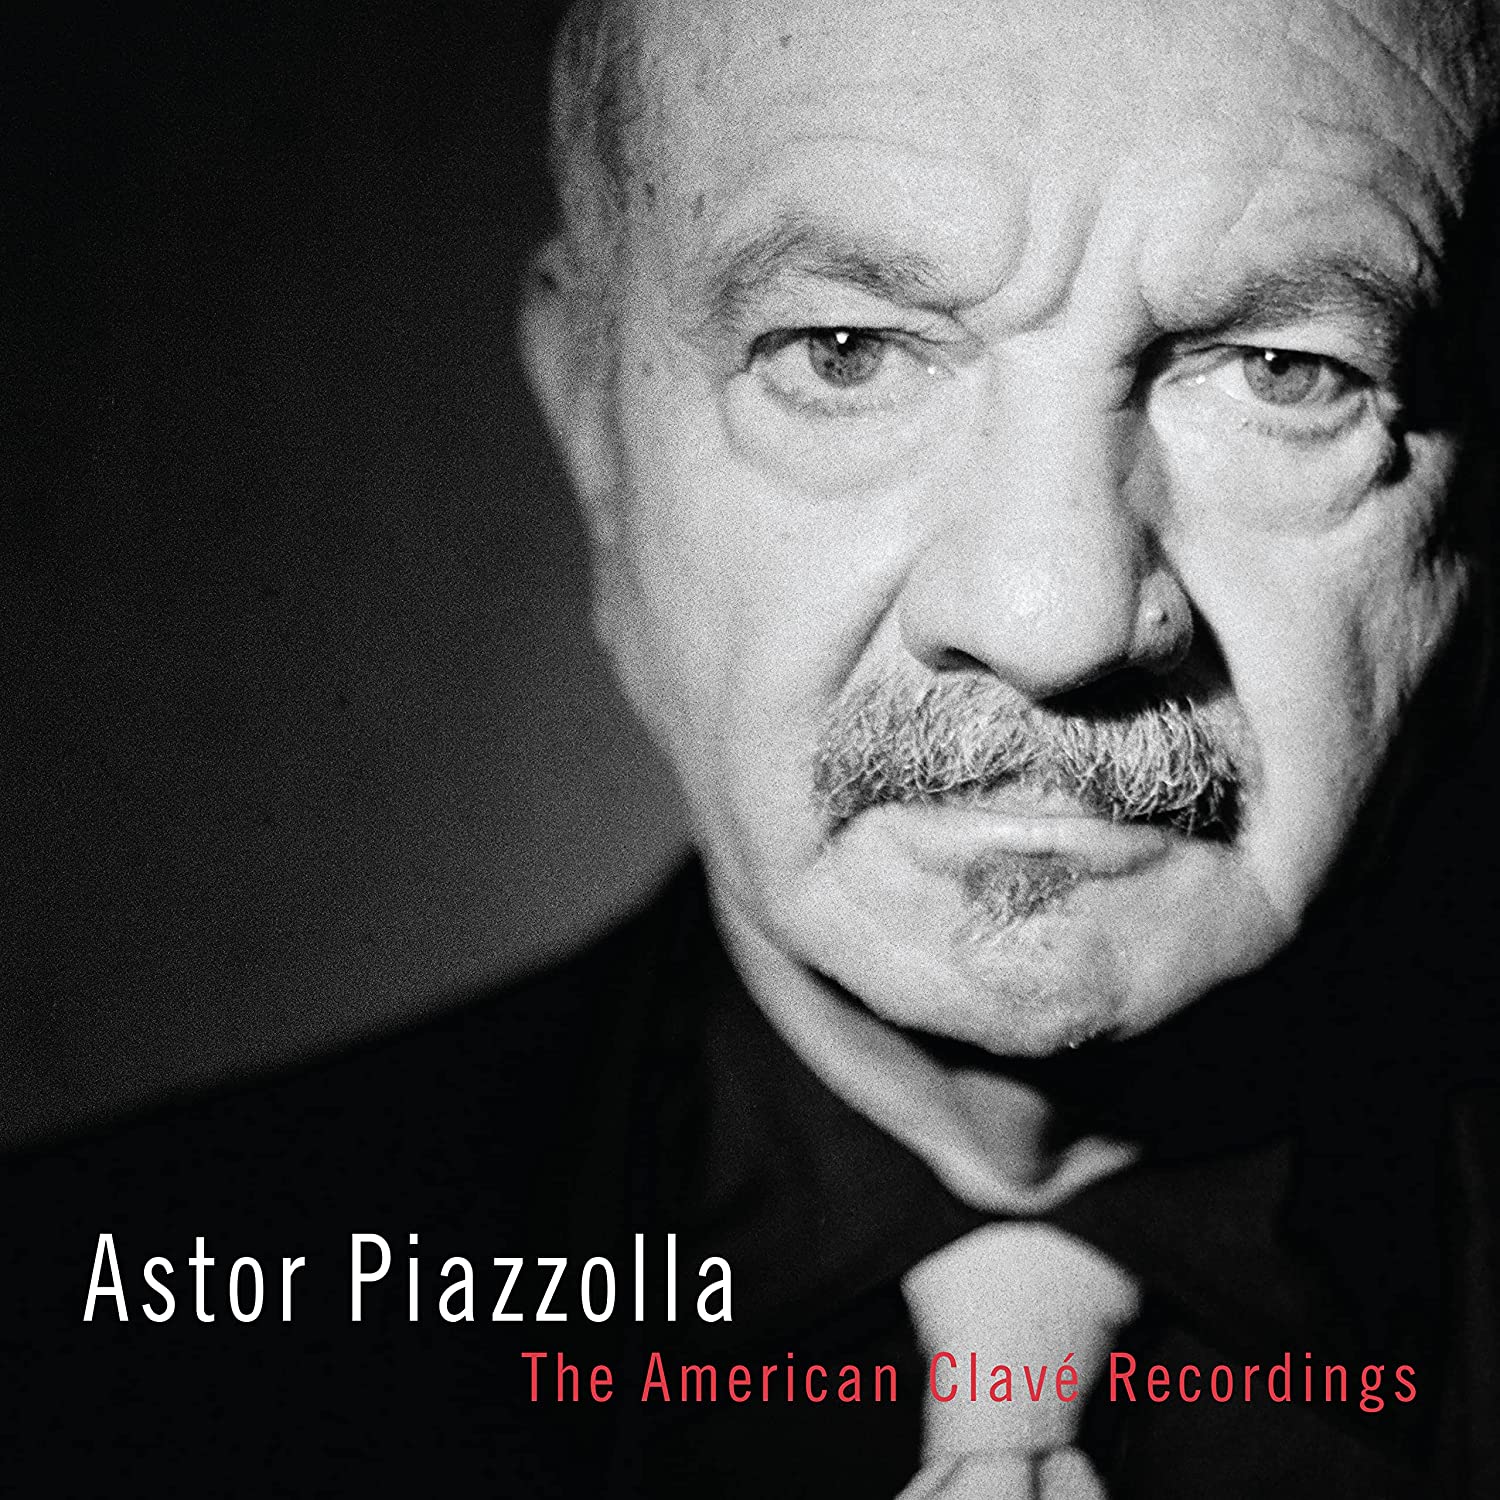 Copertina Vinile 33 giri The American Clavé Recordings di Astor Piazzolla